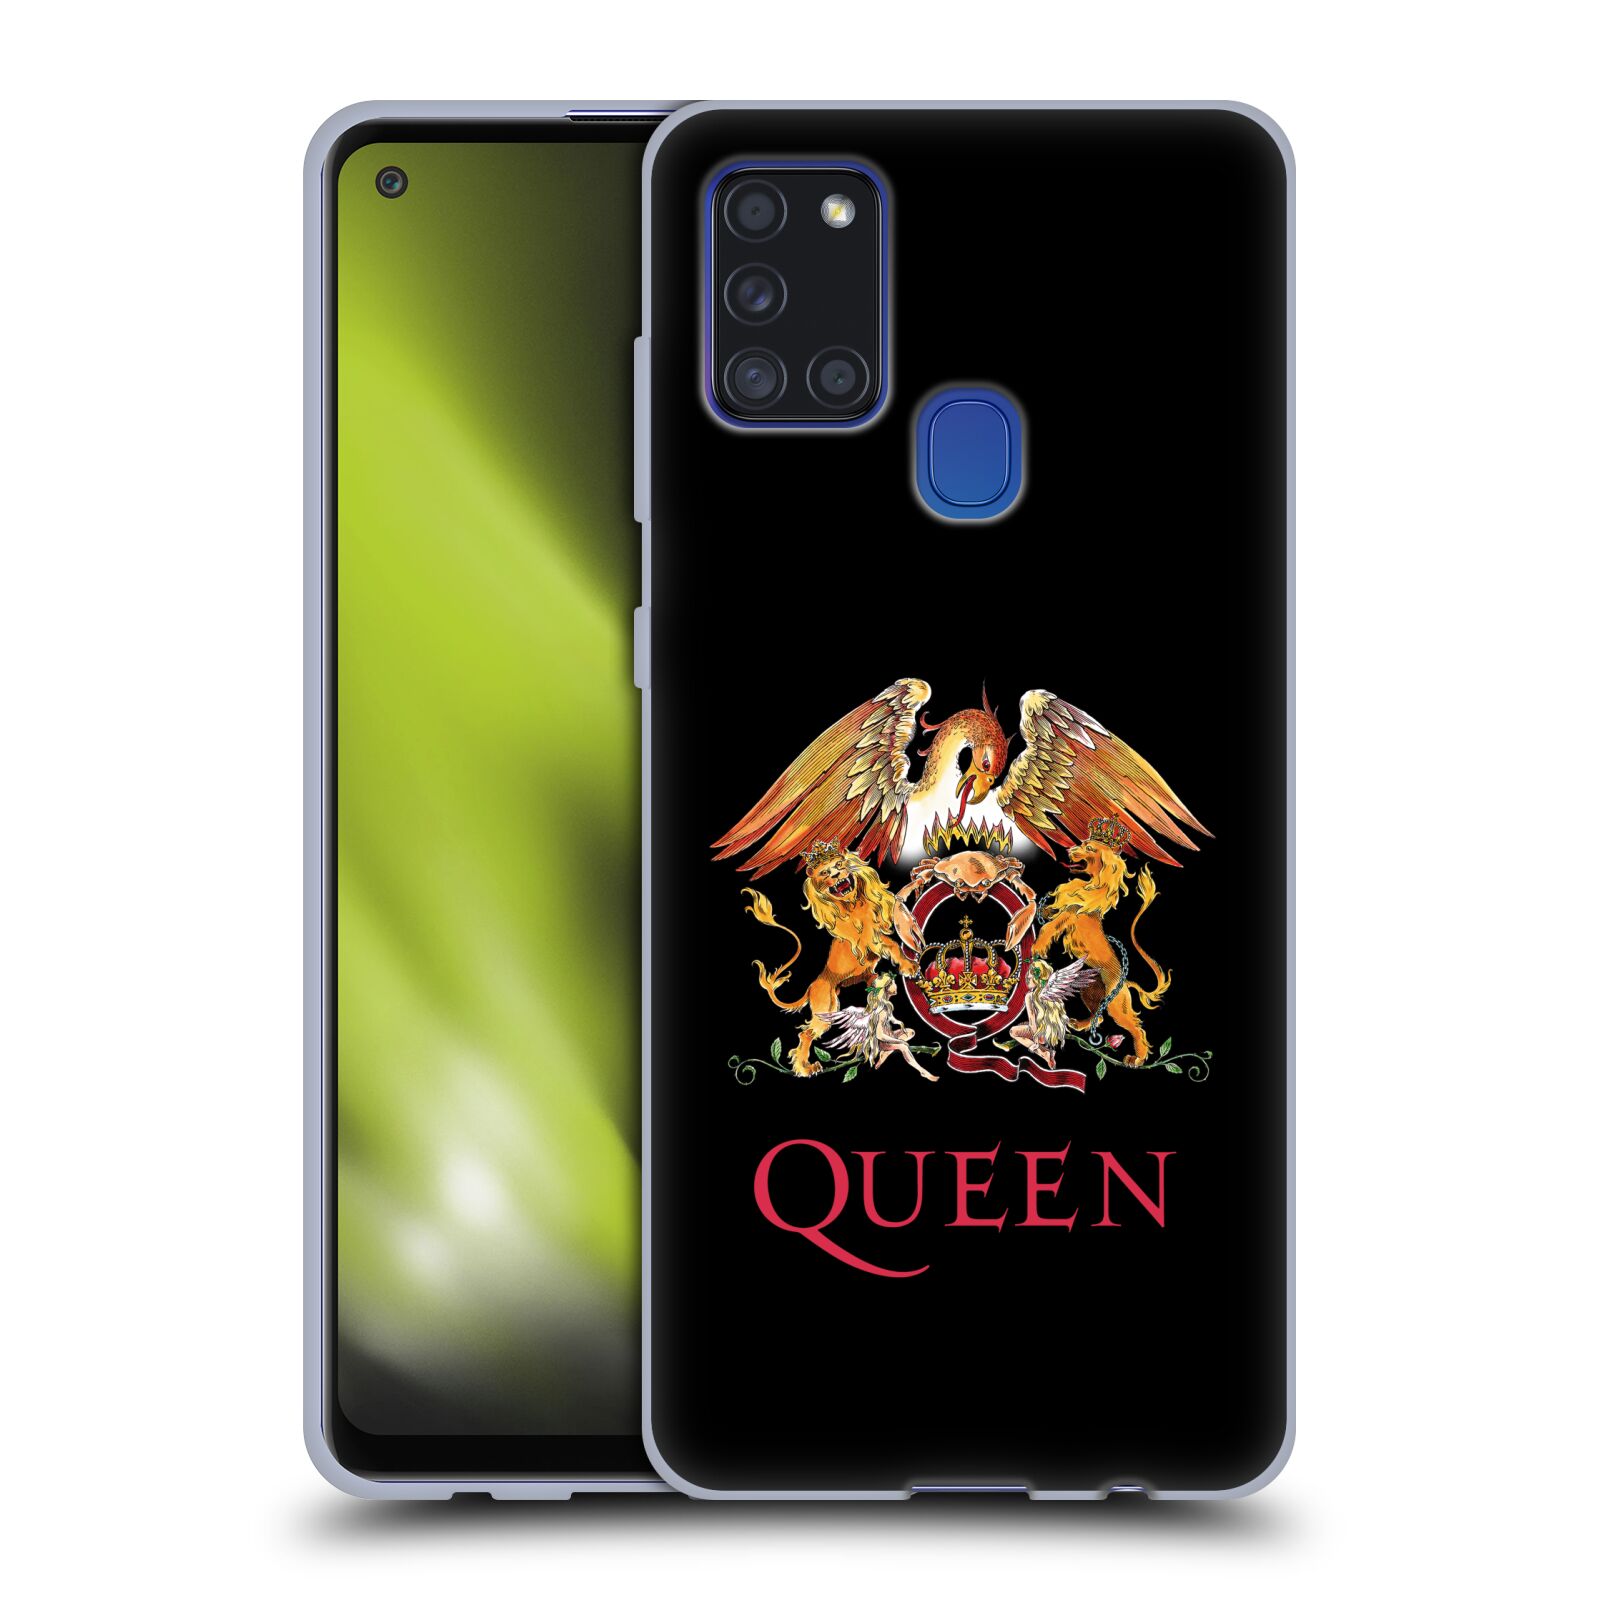 Silikonové pouzdro na mobil Samsung Galaxy A21s - Head Case - Queen - Logo (Silikonový kryt, obal, pouzdro na mobilní telefon Samsung Galaxy A21s SM-A217F s motivem Queen - Logo)